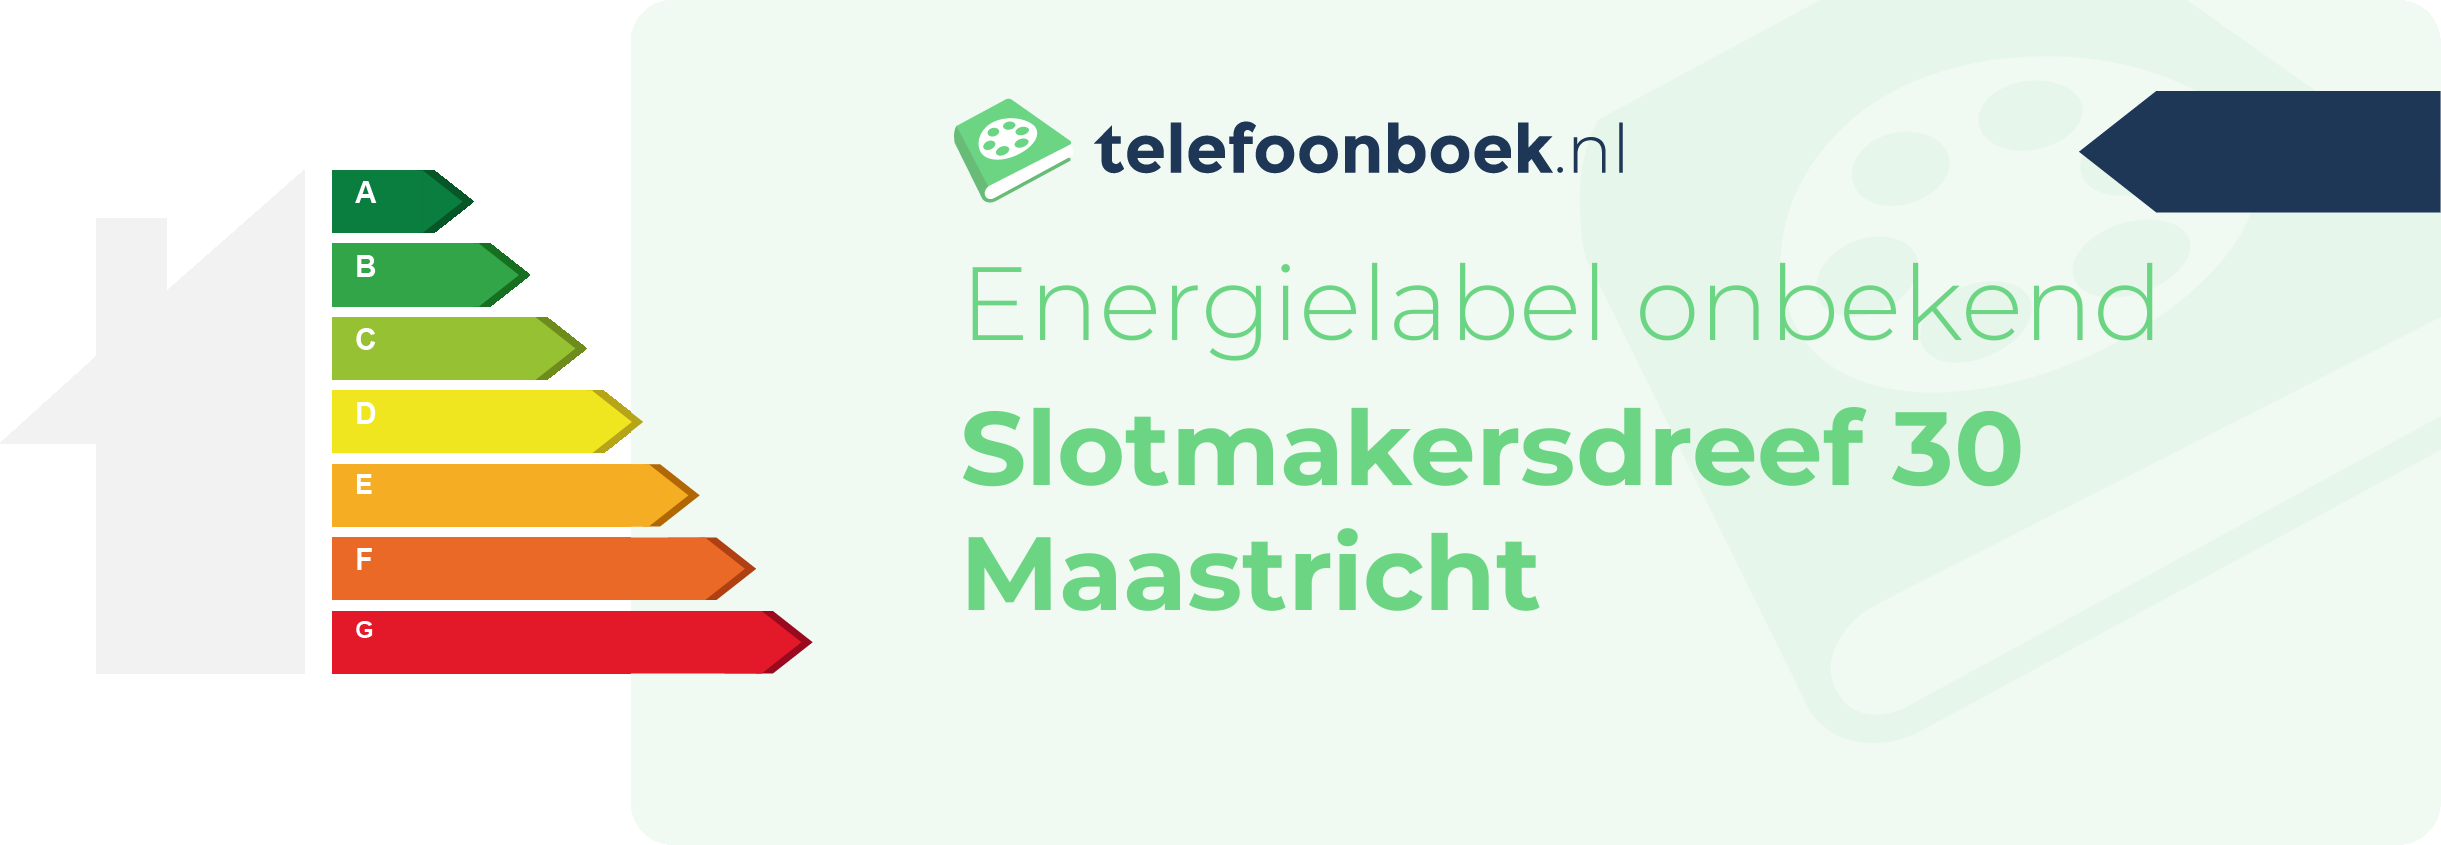 Energielabel Slotmakersdreef 30 Maastricht